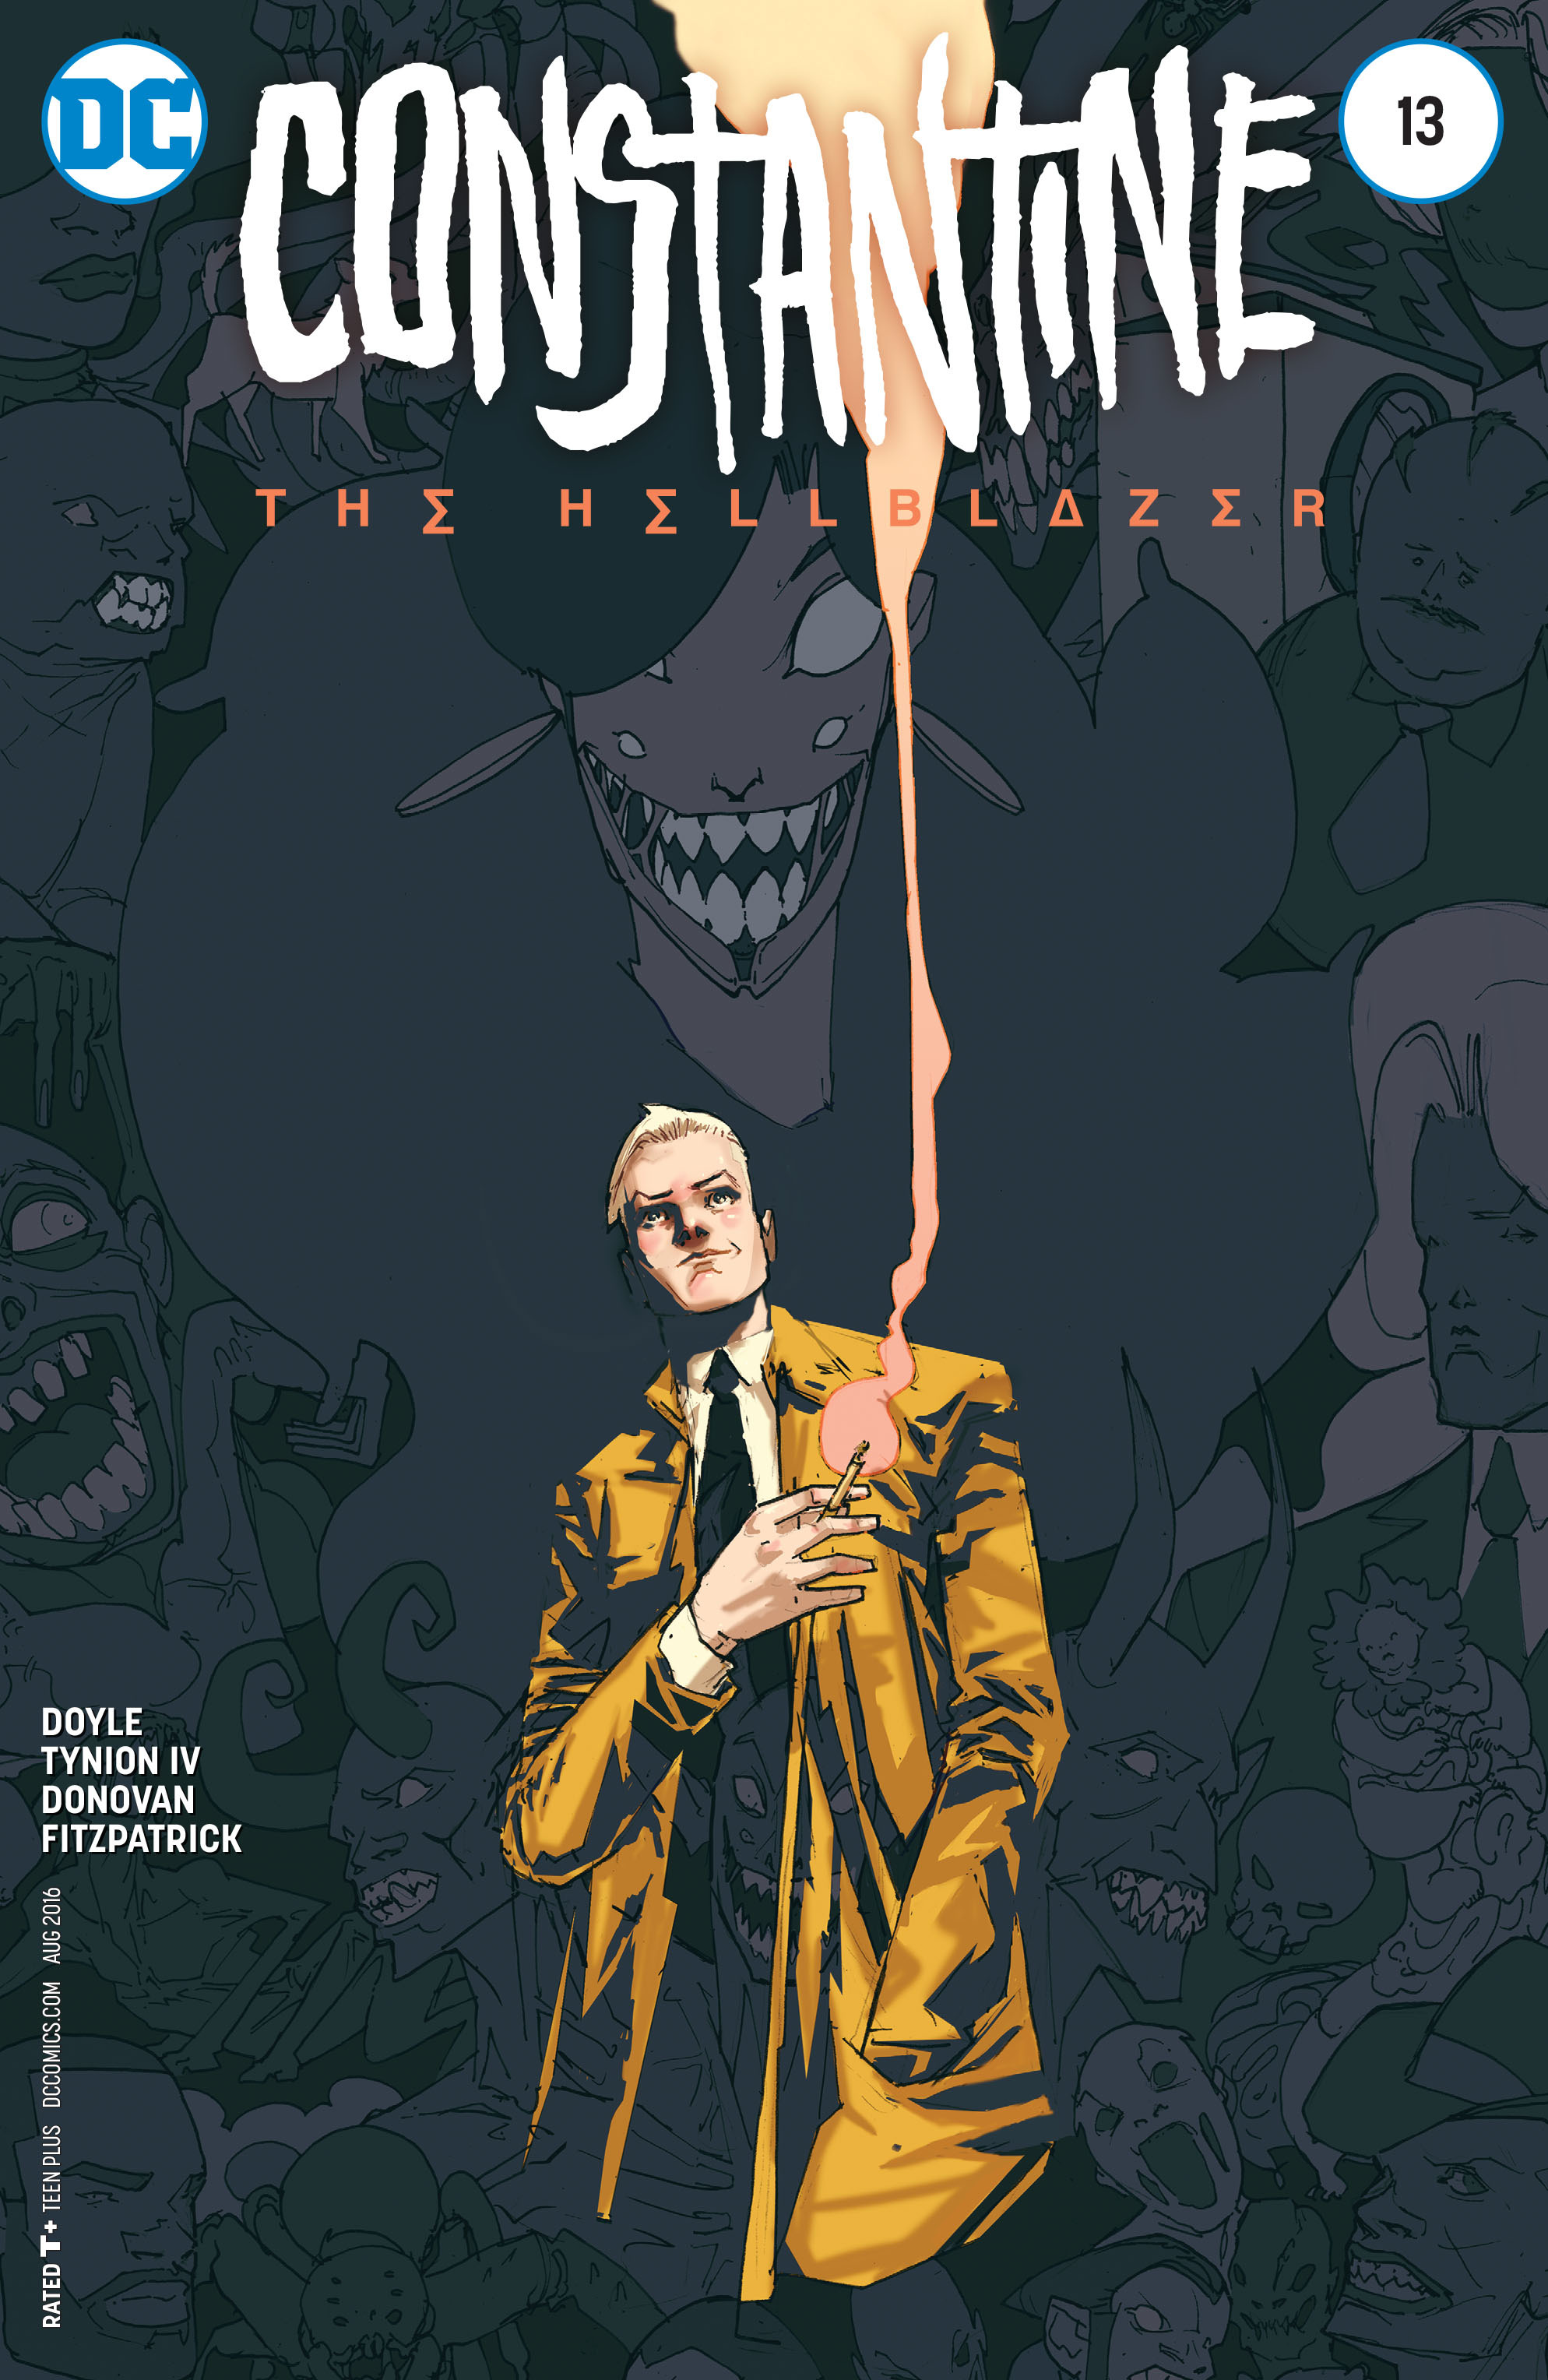 Read online Constantine: The Hellblazer comic -  Issue #13 - 1